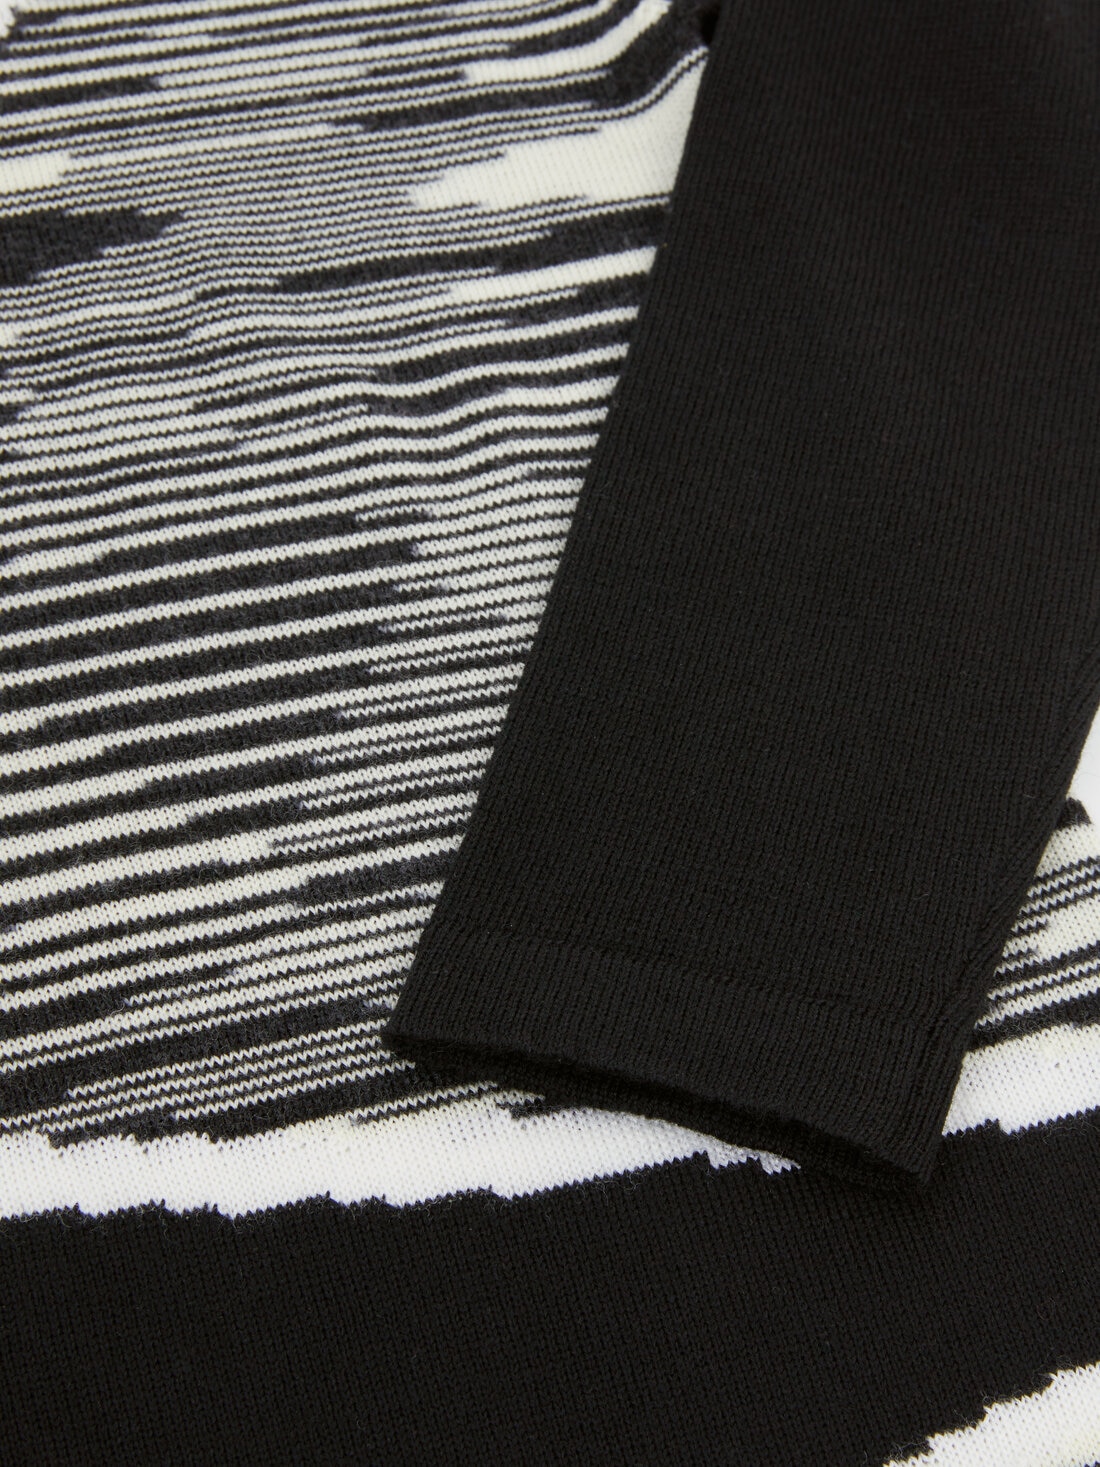 Robe en pure laine vierge, Noir & Blanc - KS23WG06BV00EPSM92O - 3